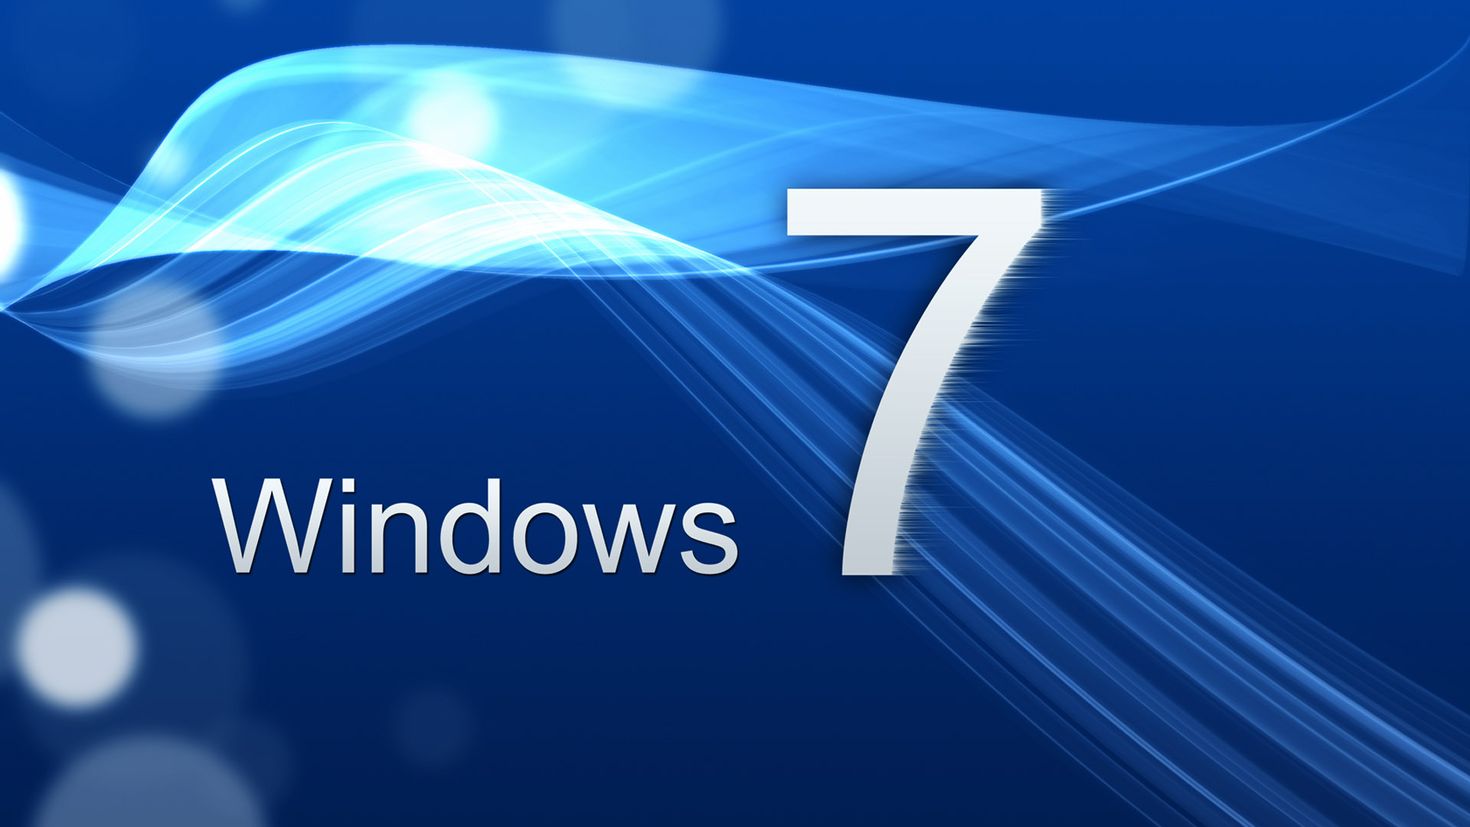 Windows семерка. Виндовс 7. Картинки виндовс 7. Фон Windows 7. Логотип Windows 7.